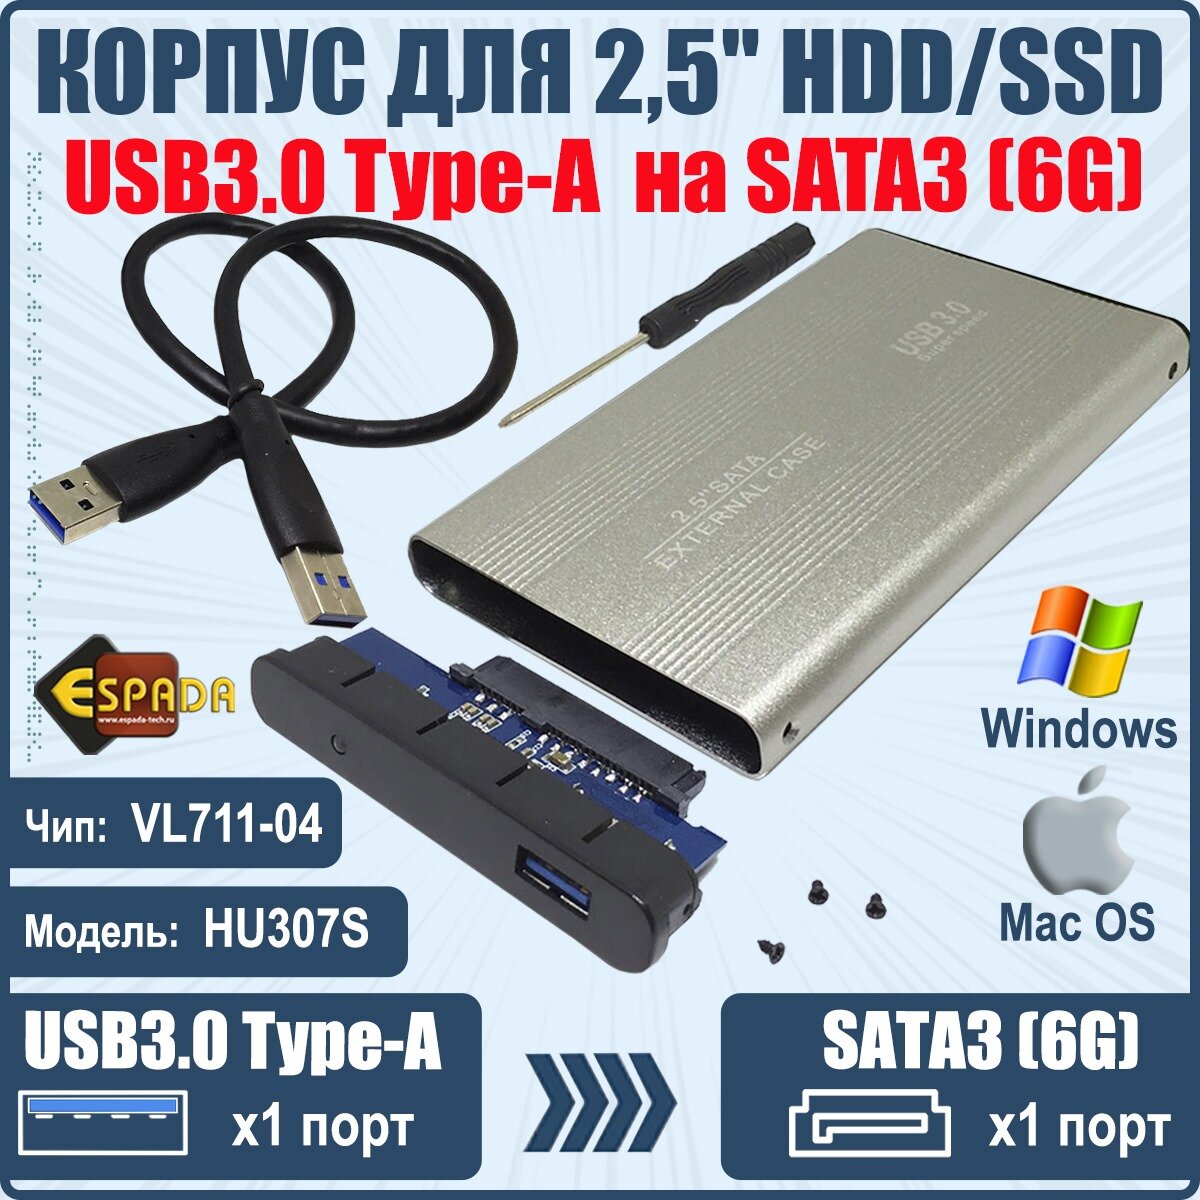 Внешний корпус USB3.0 для 2.5” HDD/SSD Sata6G, модель HU307S, Espada, цвет серебро